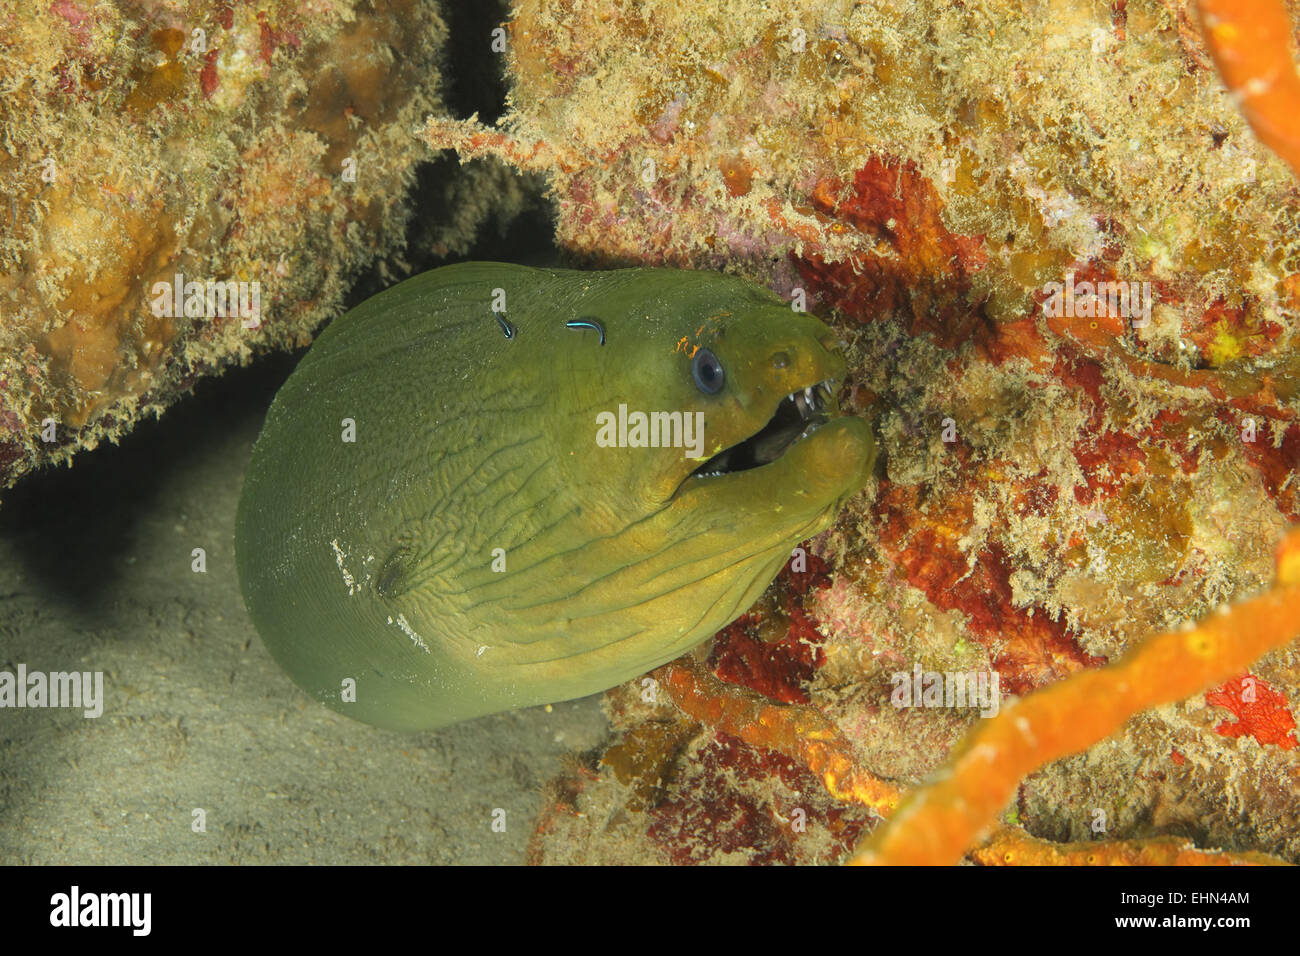 Green Moray (Gymnothorax funebris) being cleaned by a pair of Neon Gobies (Gobiosoma oceanops) - Roatan, Honduras Stock Photo